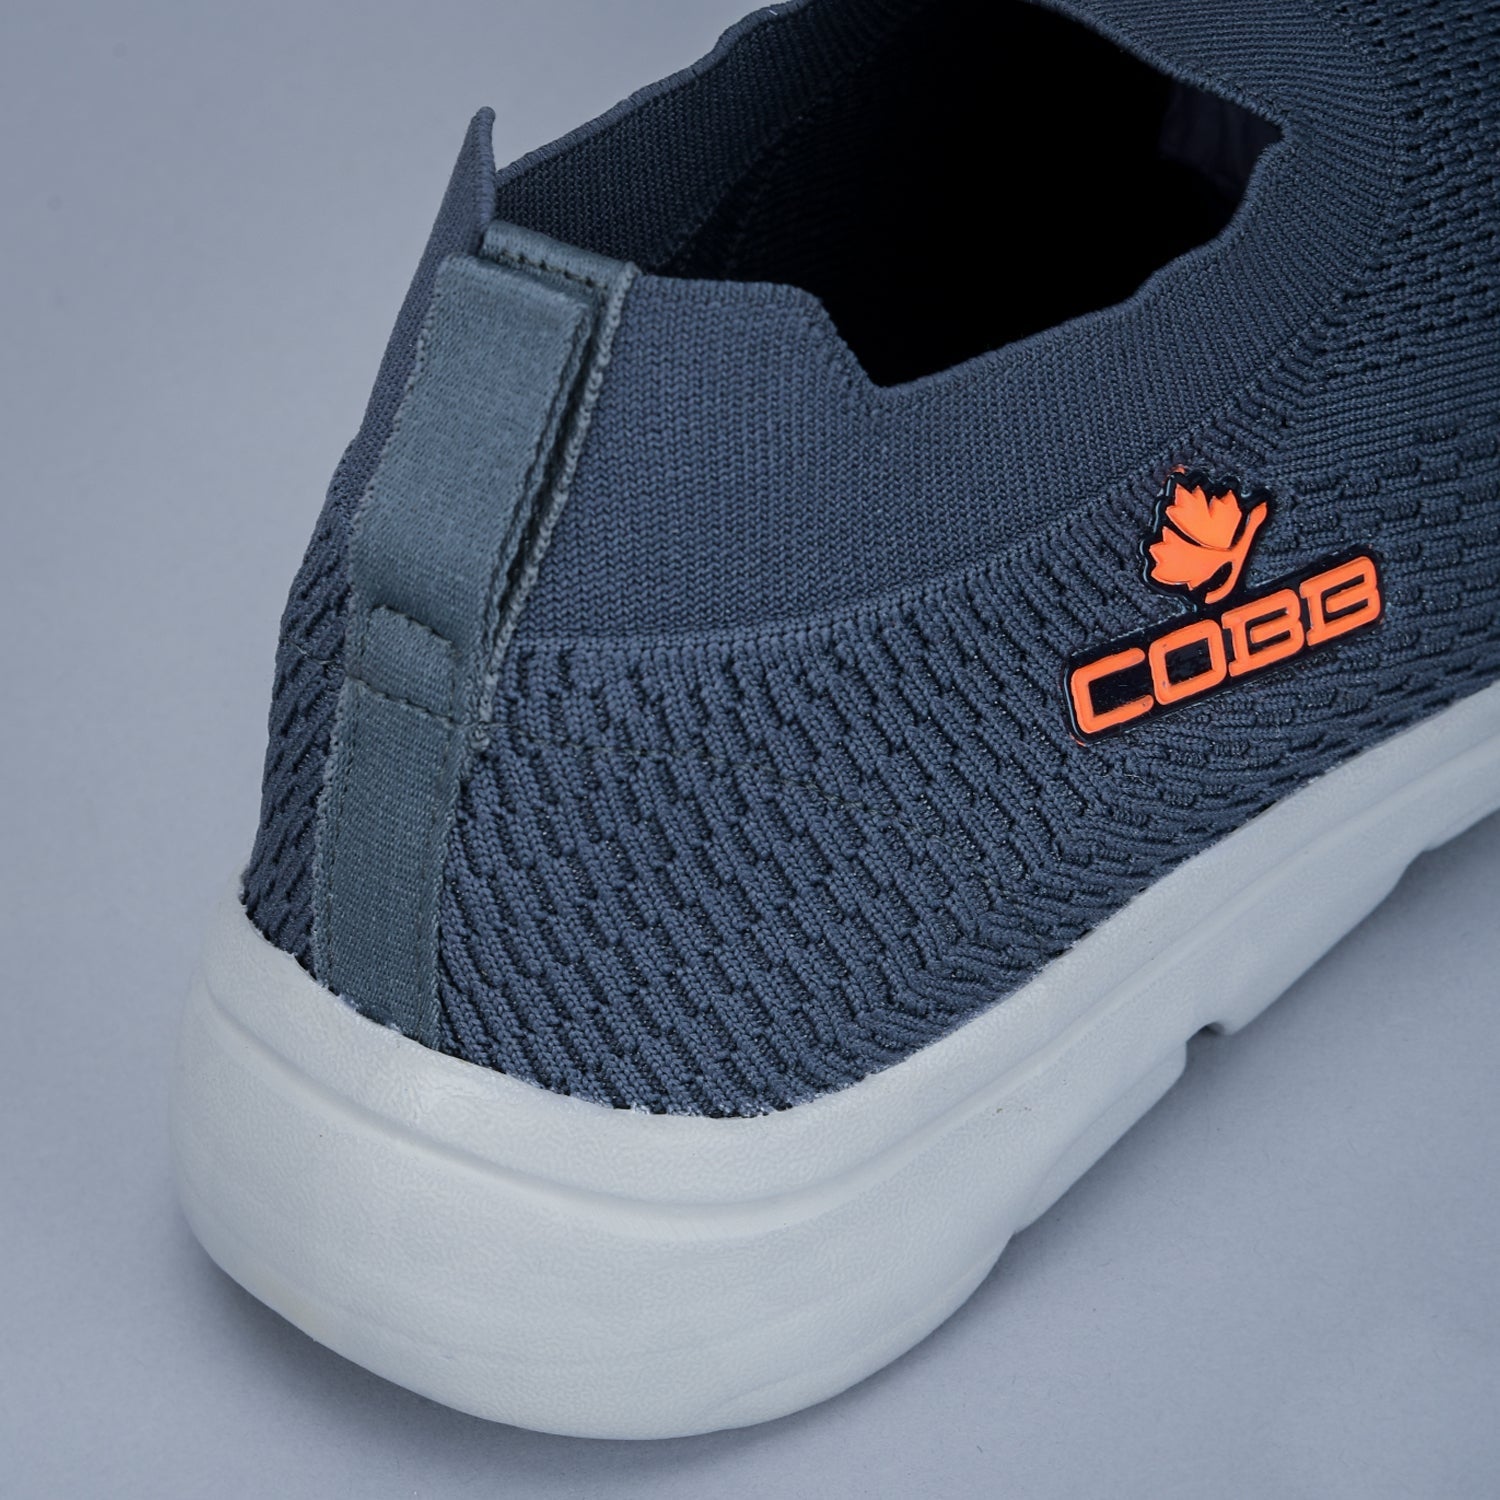 Cobb Mens Dark Grey Running Shoes